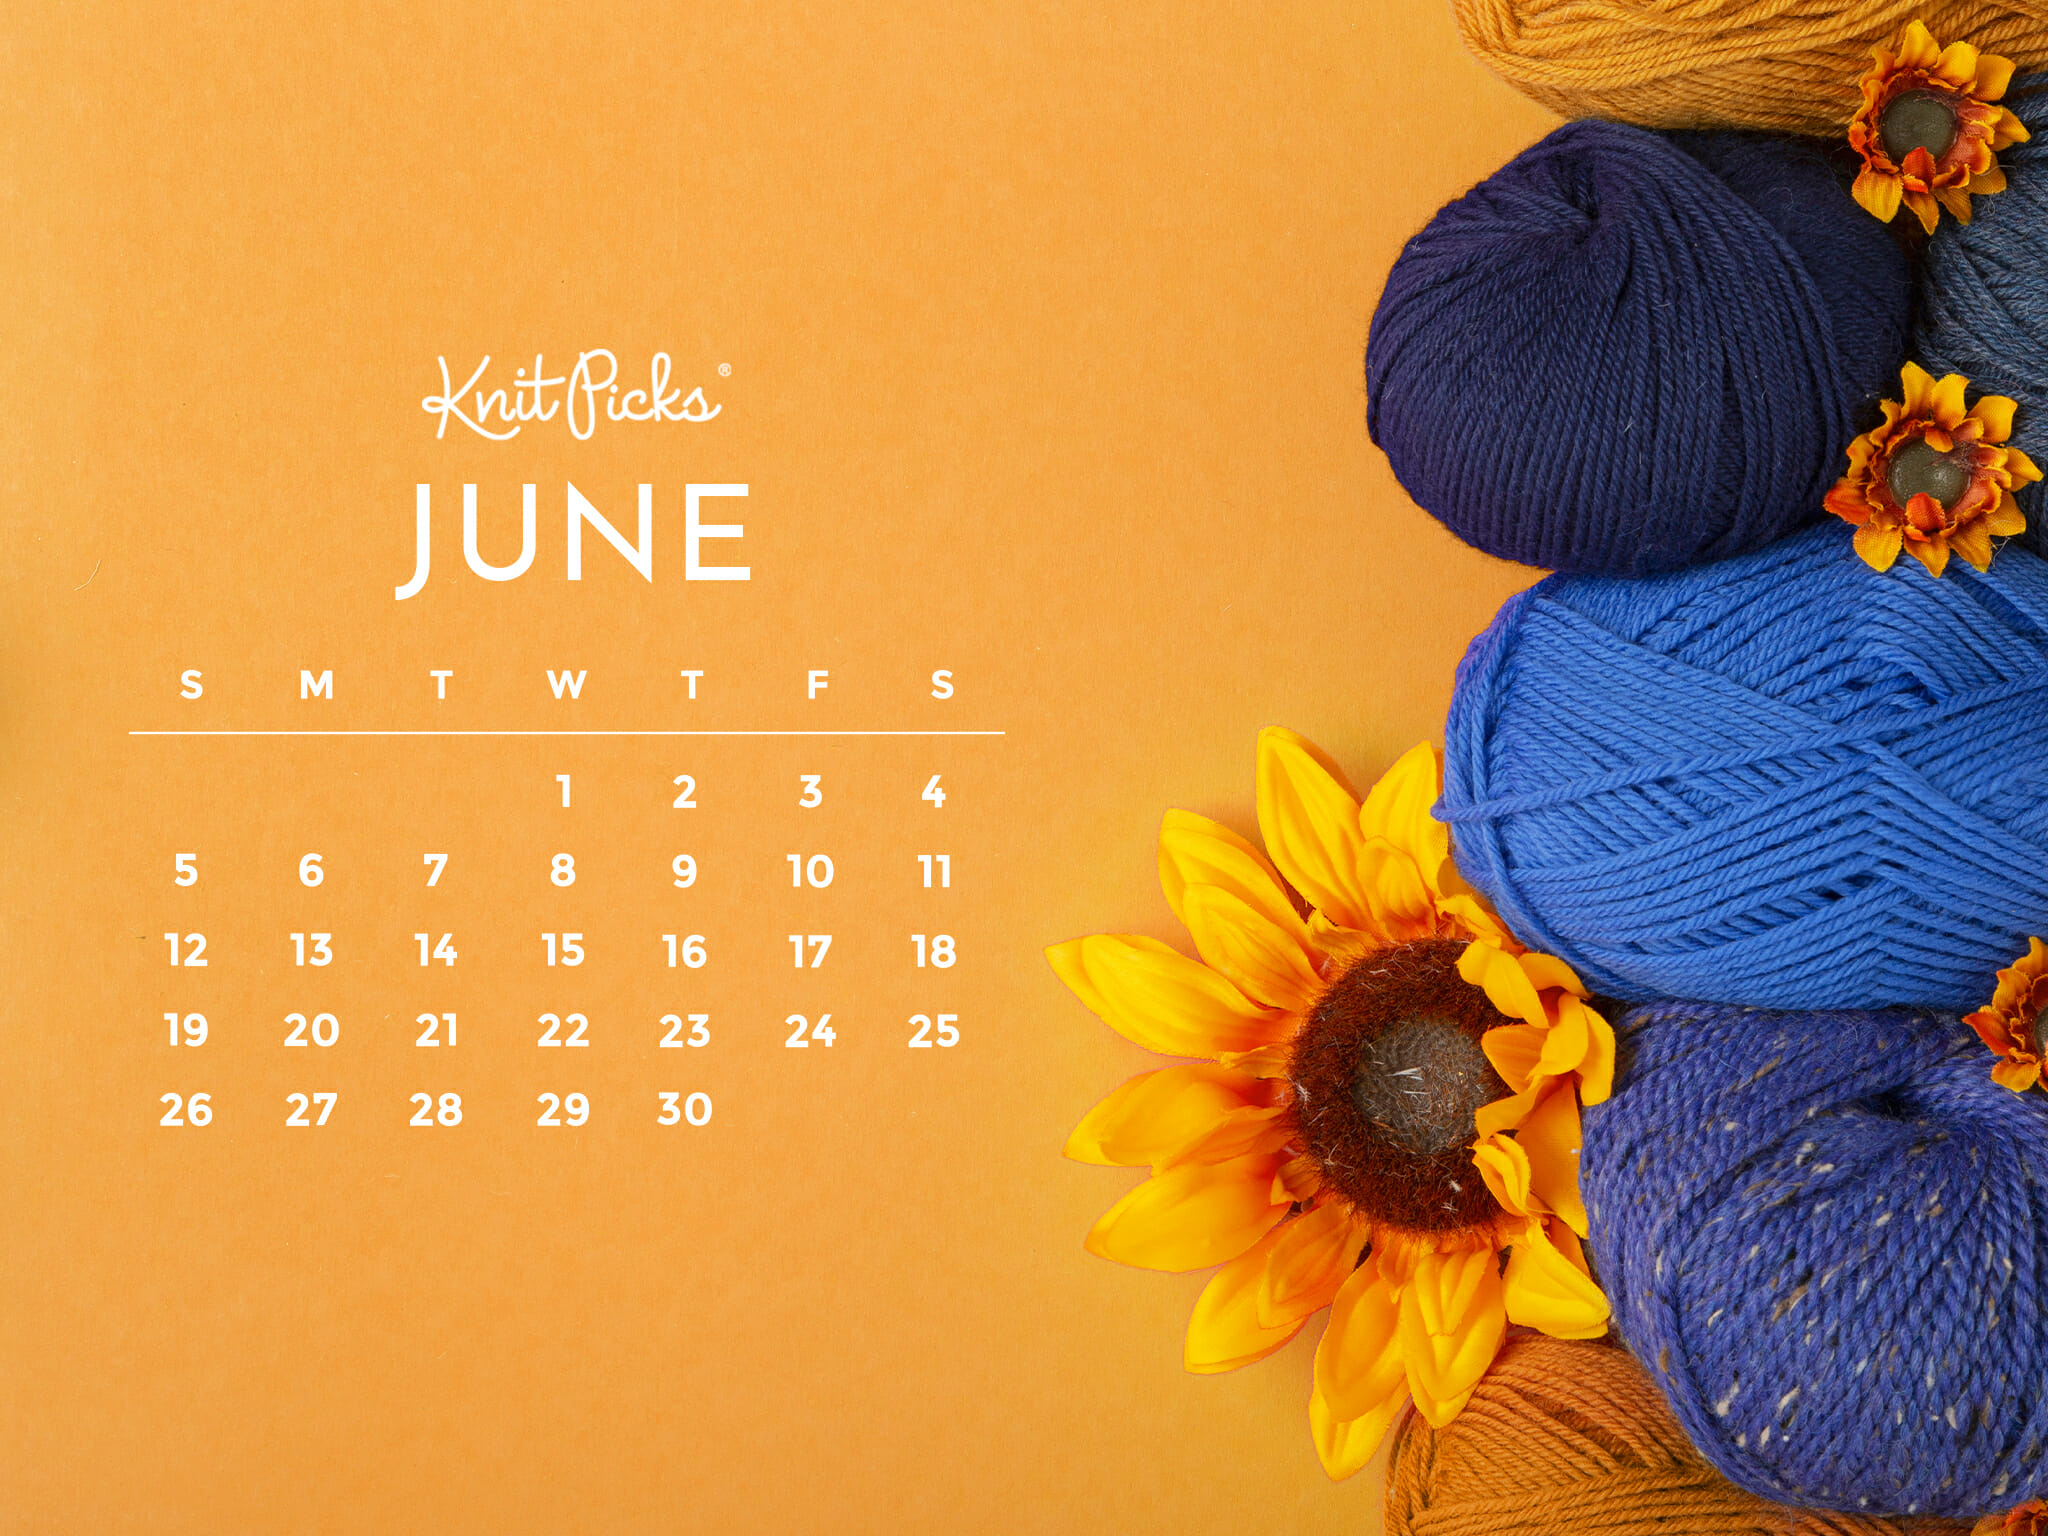 Free Downloadable June 2022 Calendar The Knit Picks Staff Knitting Blog